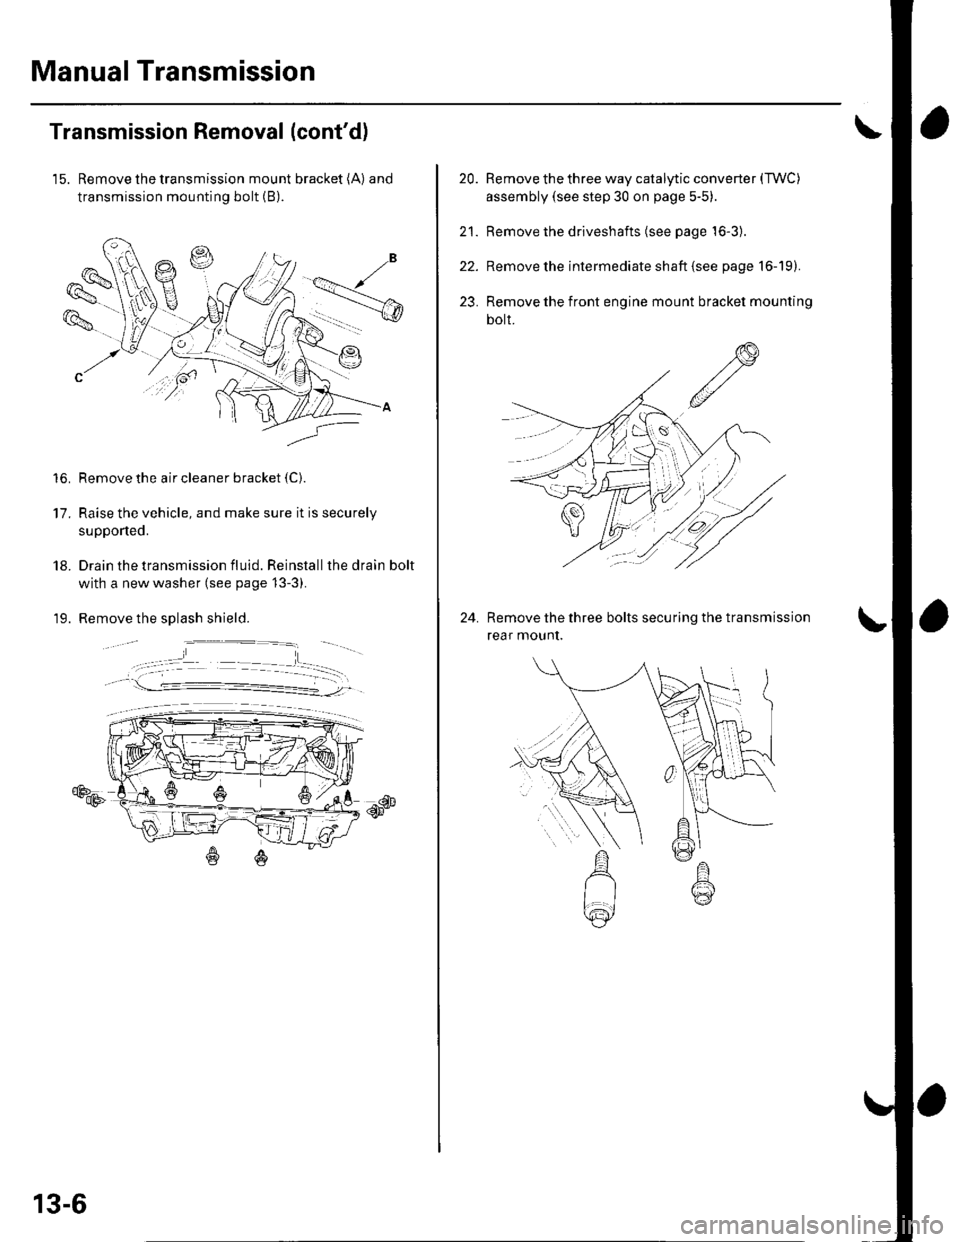 HONDA CIVIC 2003 7.G Workshop Manual Manual Transmission
Transmission Removal (contd)
15. Remove the transmission mount bracket (A) and
transmission mounting bolt (B).
Remove the air cleaner bracket {C).
Raise the vehicle, and make sure